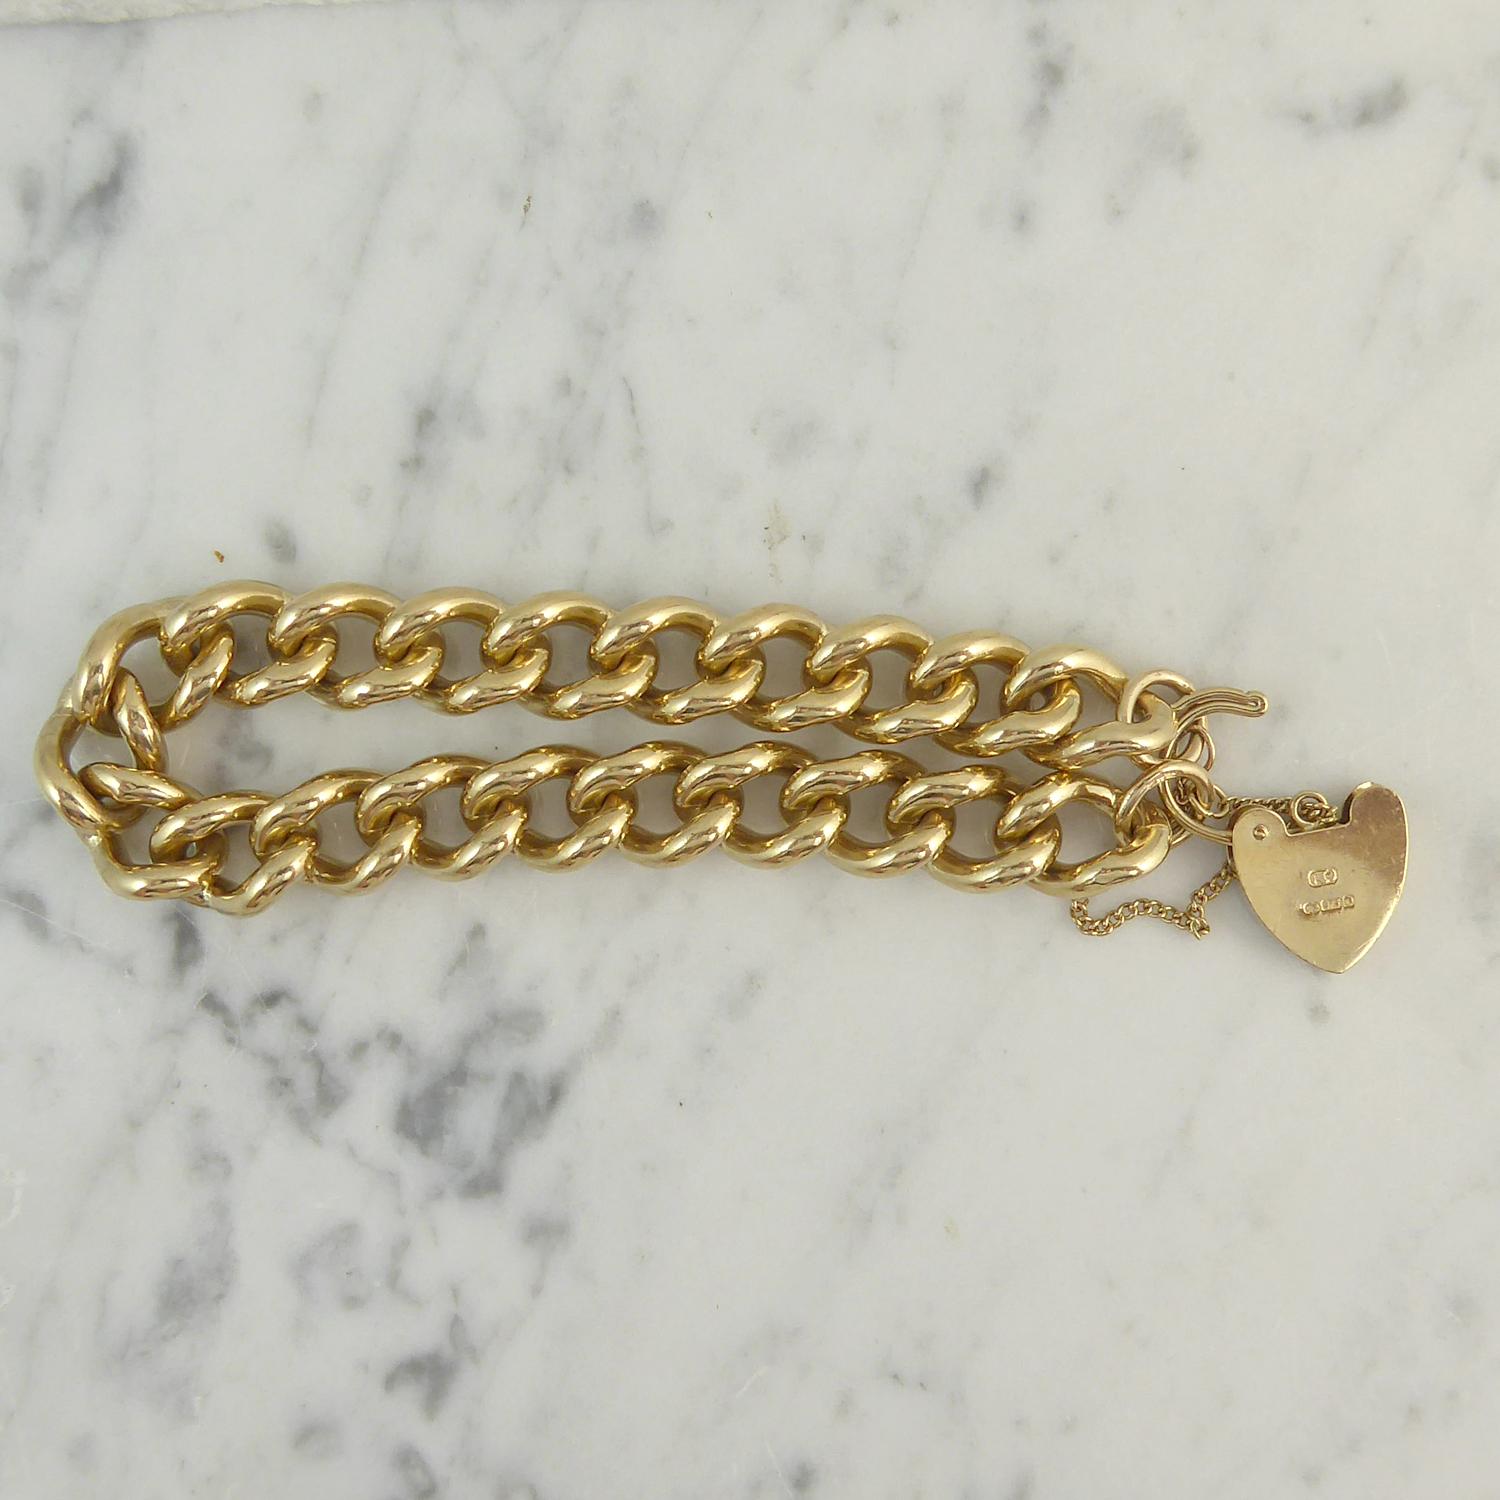 Woman's or Men's Vintage Gold Curb Link Bracelet, Padlock Closure, Yellow Gold 2